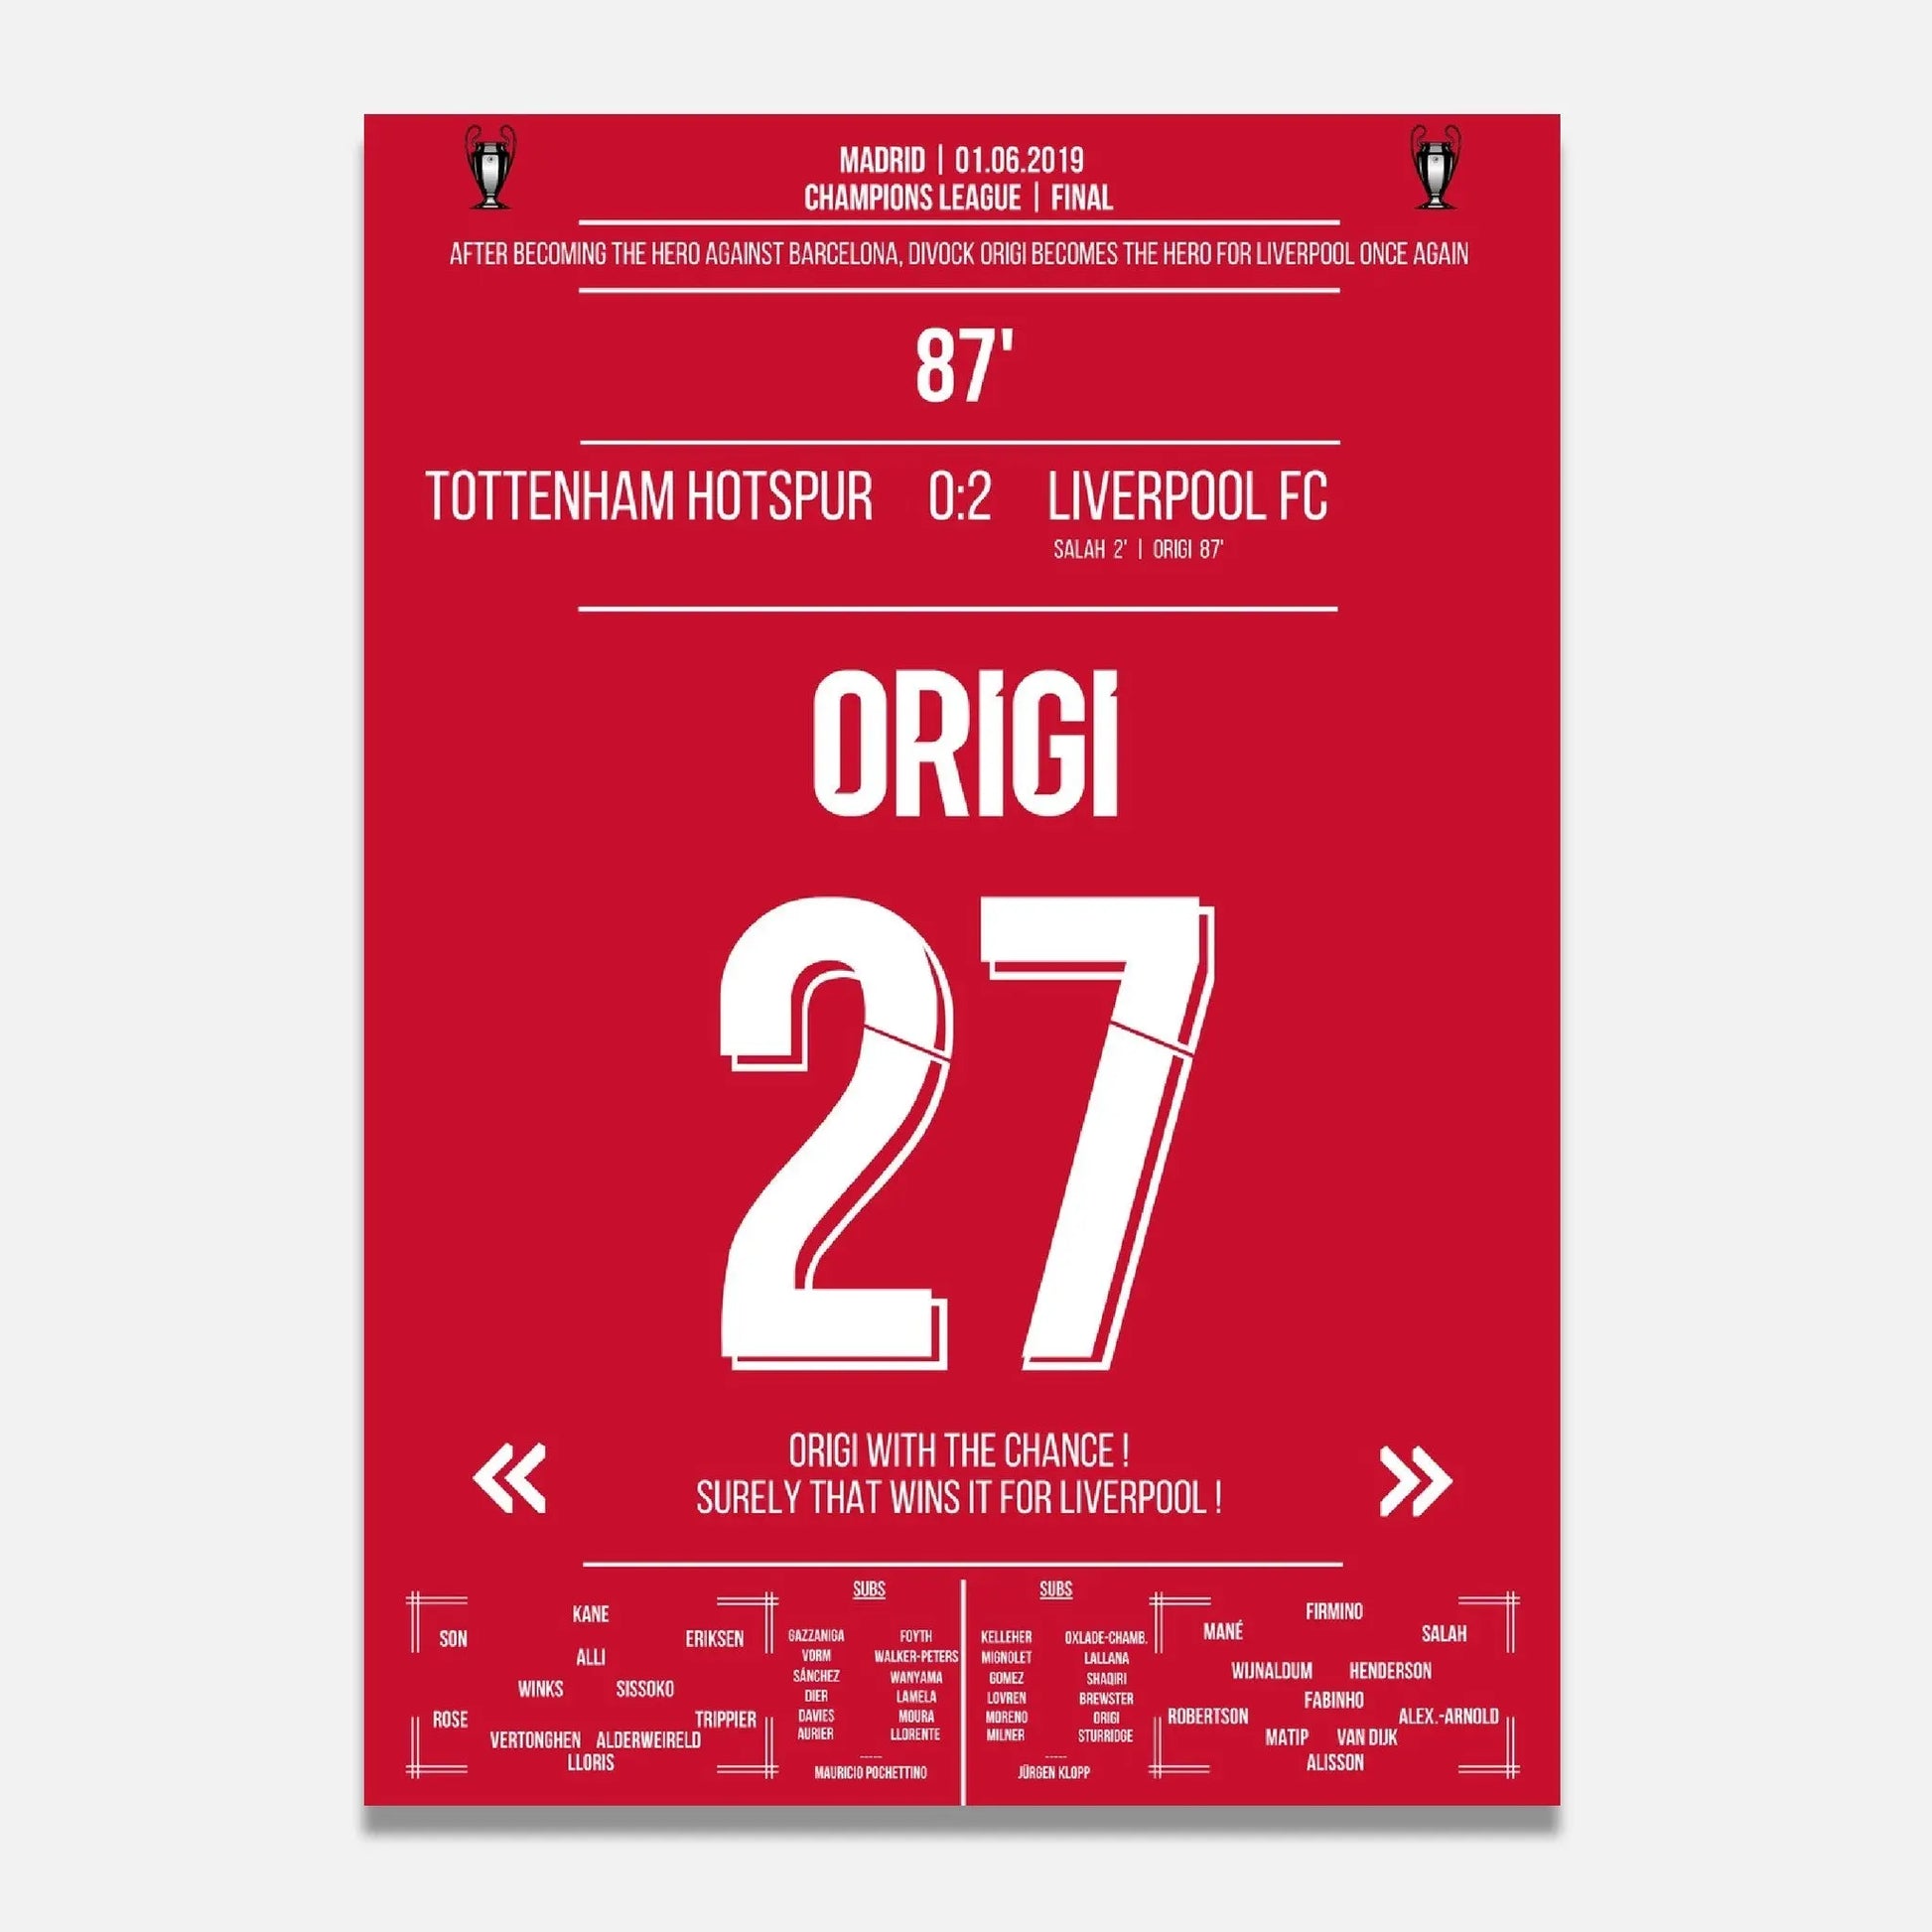 Origi's Treffer im Champions League Finale 2019 